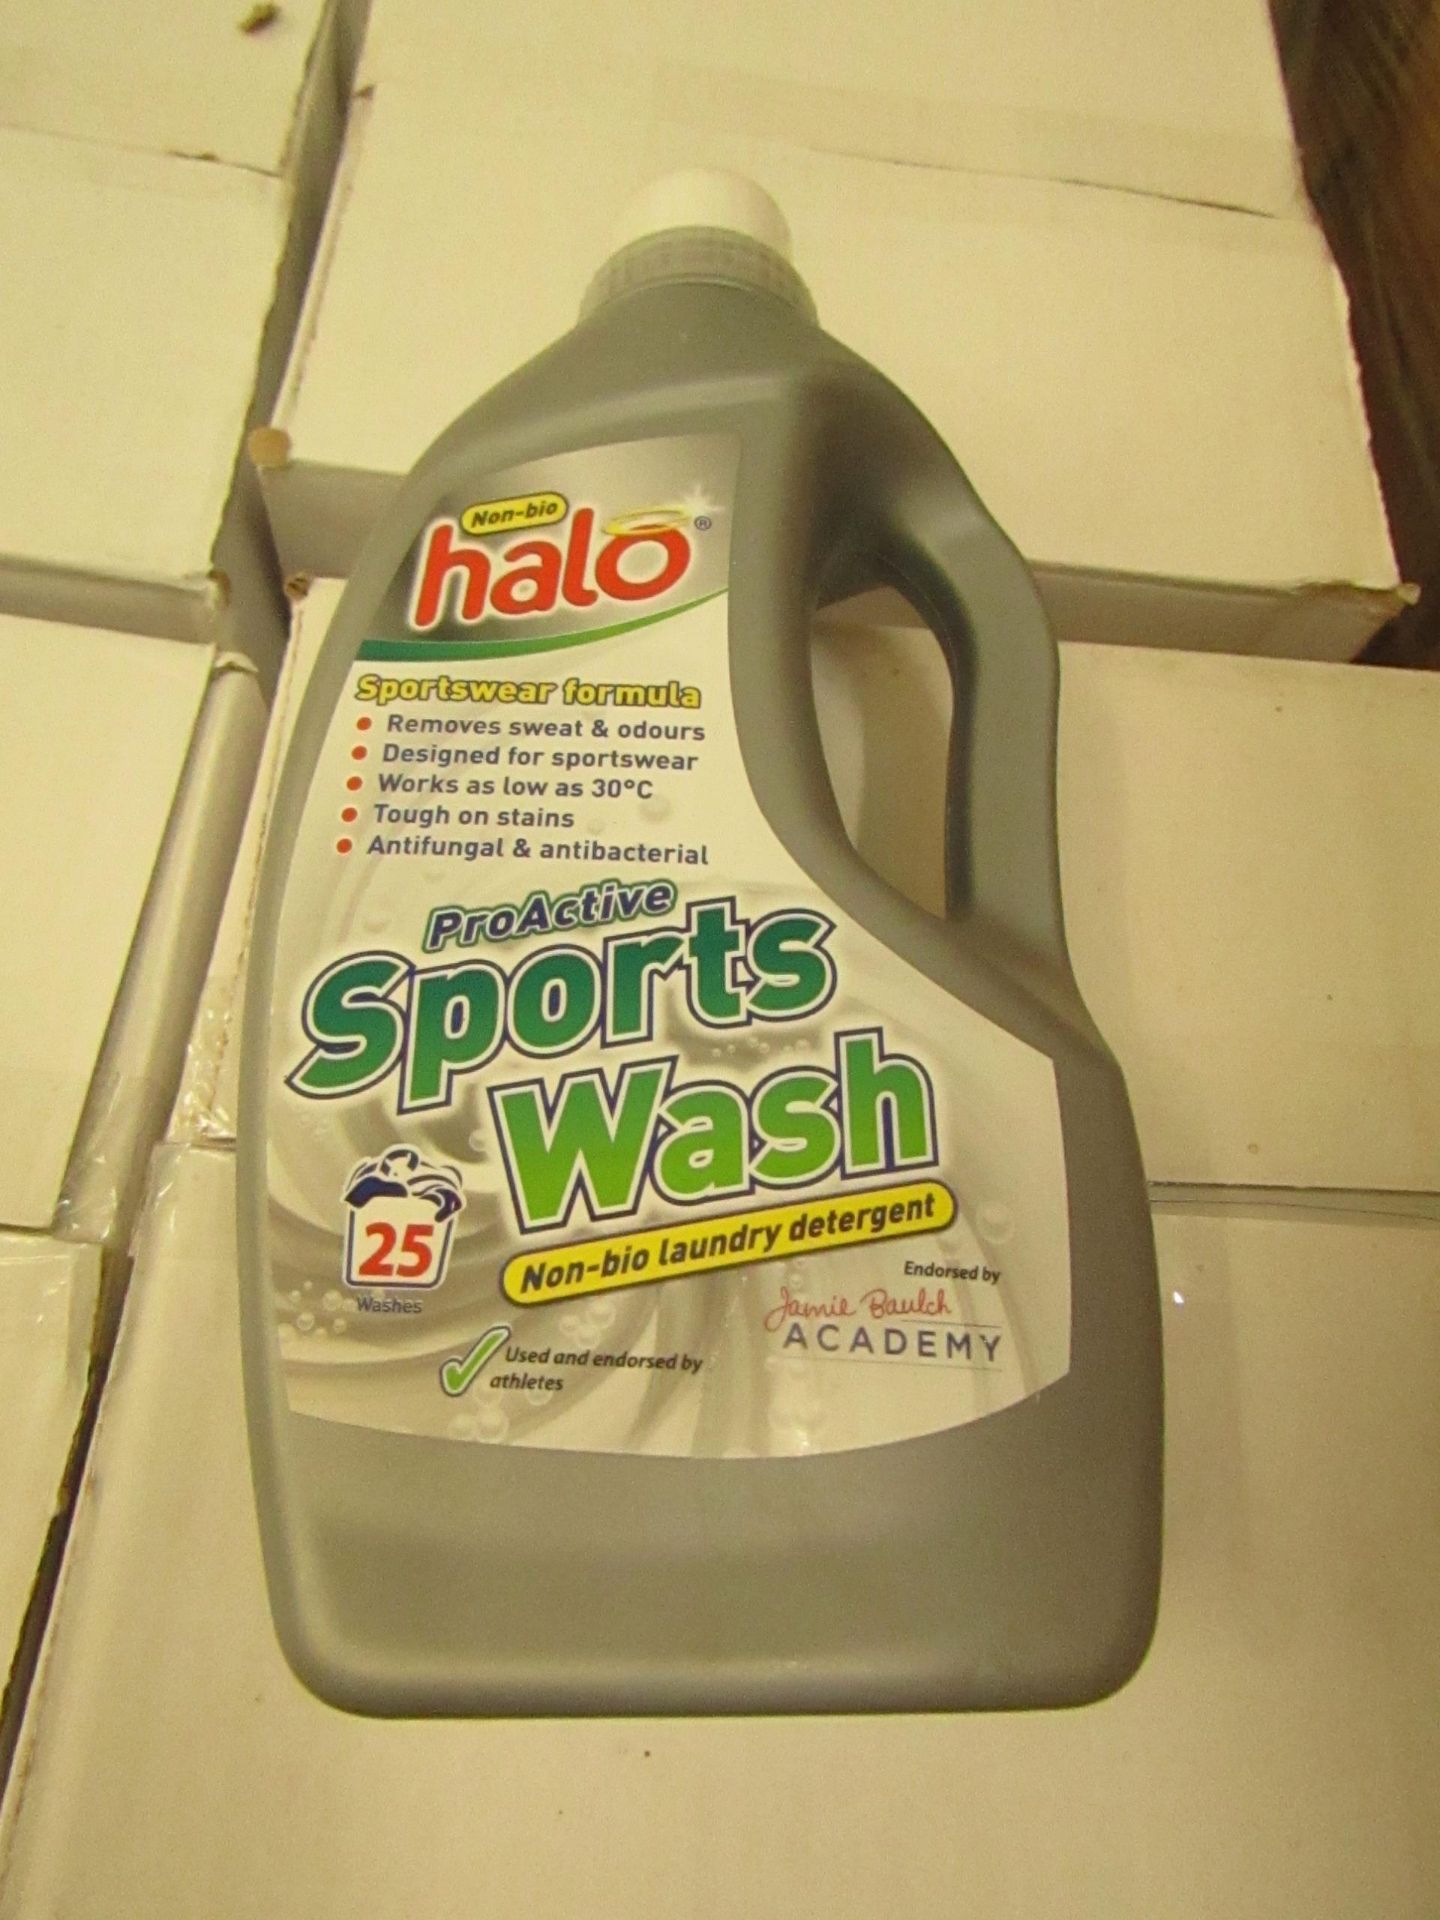 6x Halo - Non-Bio ProActive Sports Wash Laundry Detergent - 1 Litre Bottles - Unused & Boxed.